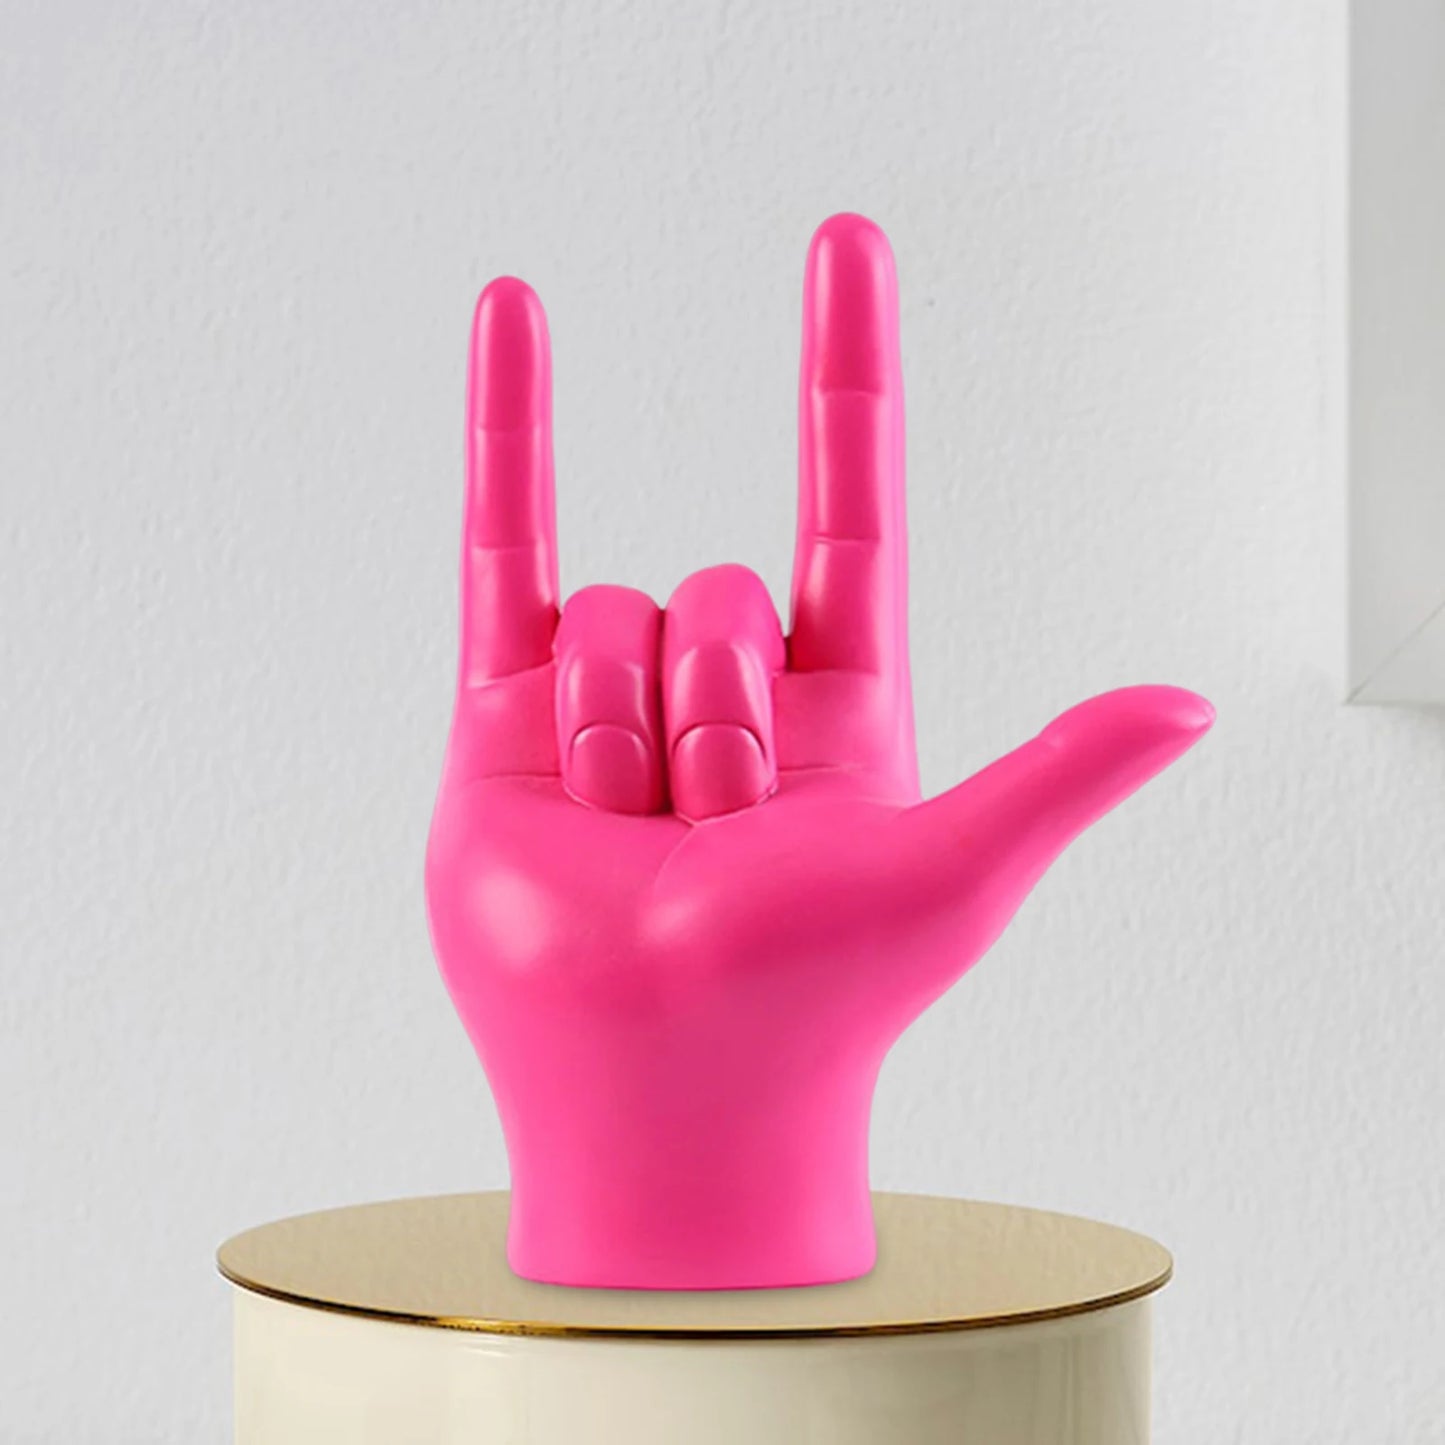 Love You Finger Gesture Statue Figurine Rock On Hand Sculpture Music Gesture Figure for Bedroom Desktop Home Decoration